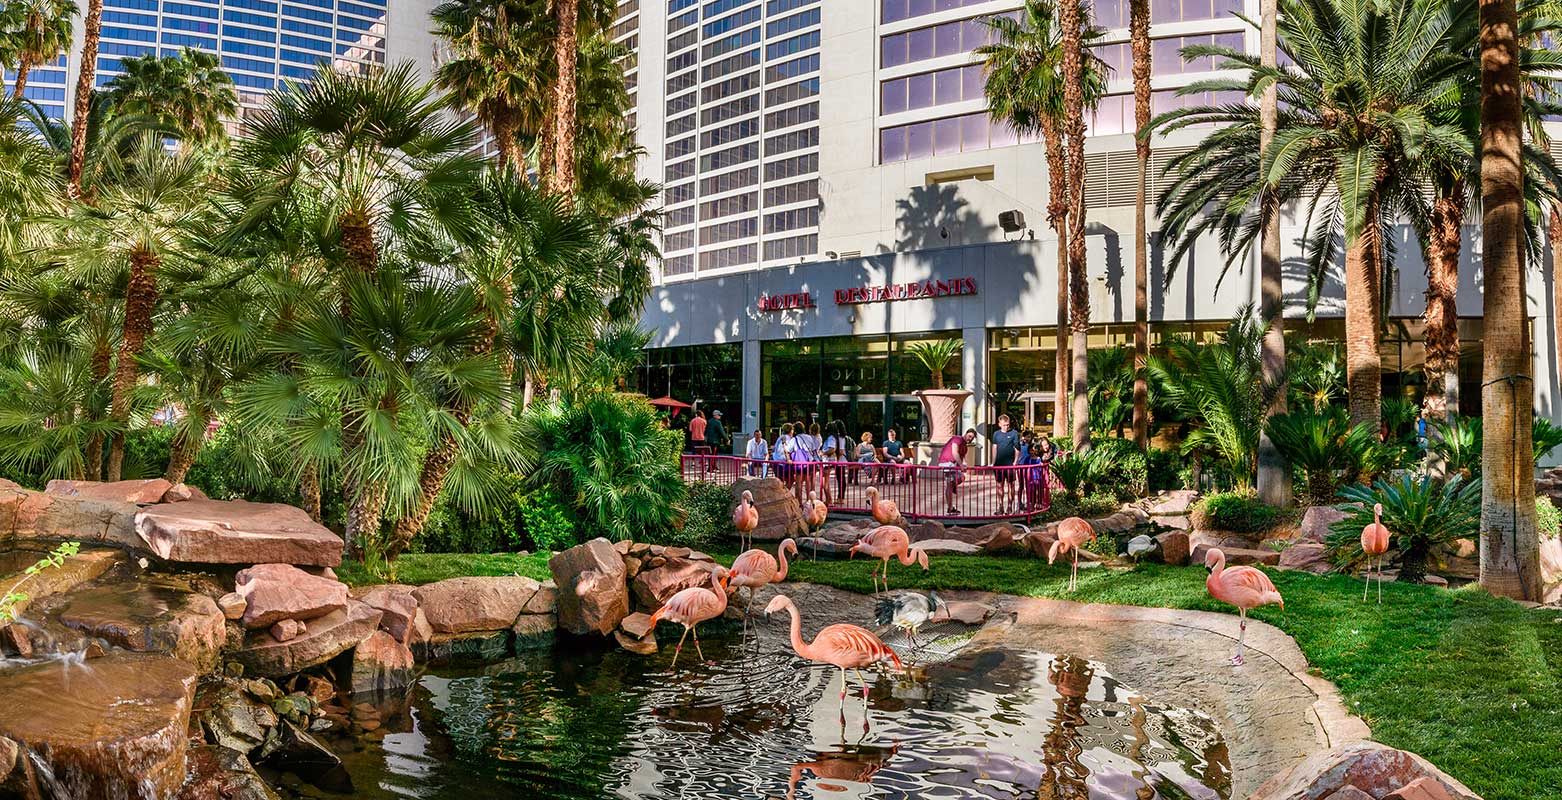 Five Little Known Facts About The Wildlife Habitat At Flamingo Las Vegas -  The latest news from Las Vegas AccessVegas.com